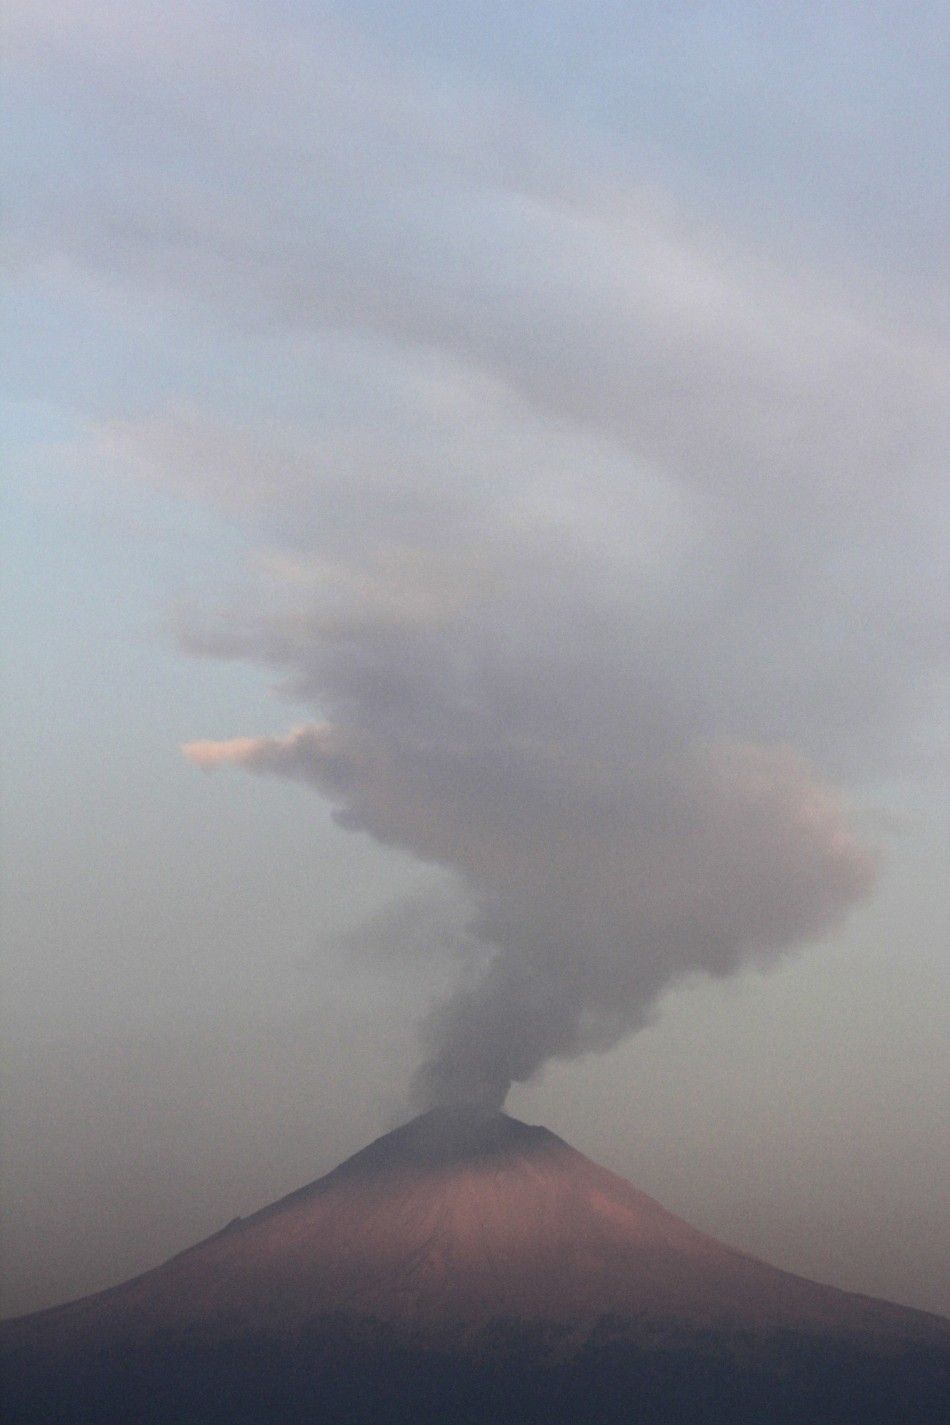 A plume of steam and ash is seen rising from the Popocatepetl volcano in San Nicolas de los Ranchos